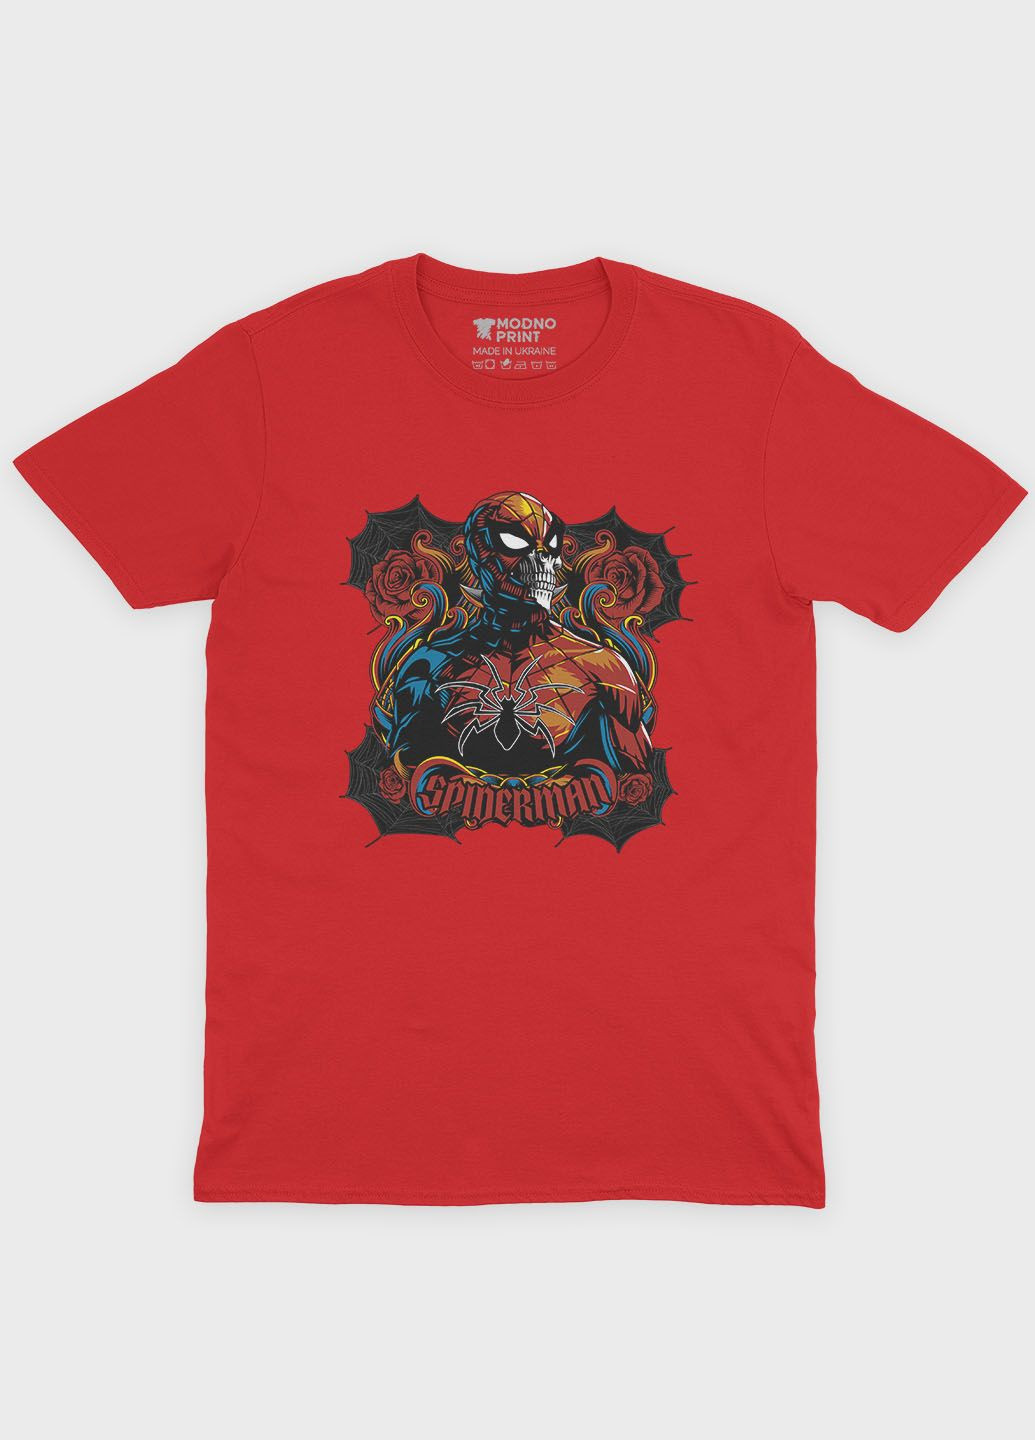 Червона демісезонна футболка для хлопчика з принтом супергероя - людина-павук (ts001-1-sre-006-014-040-b) Modno